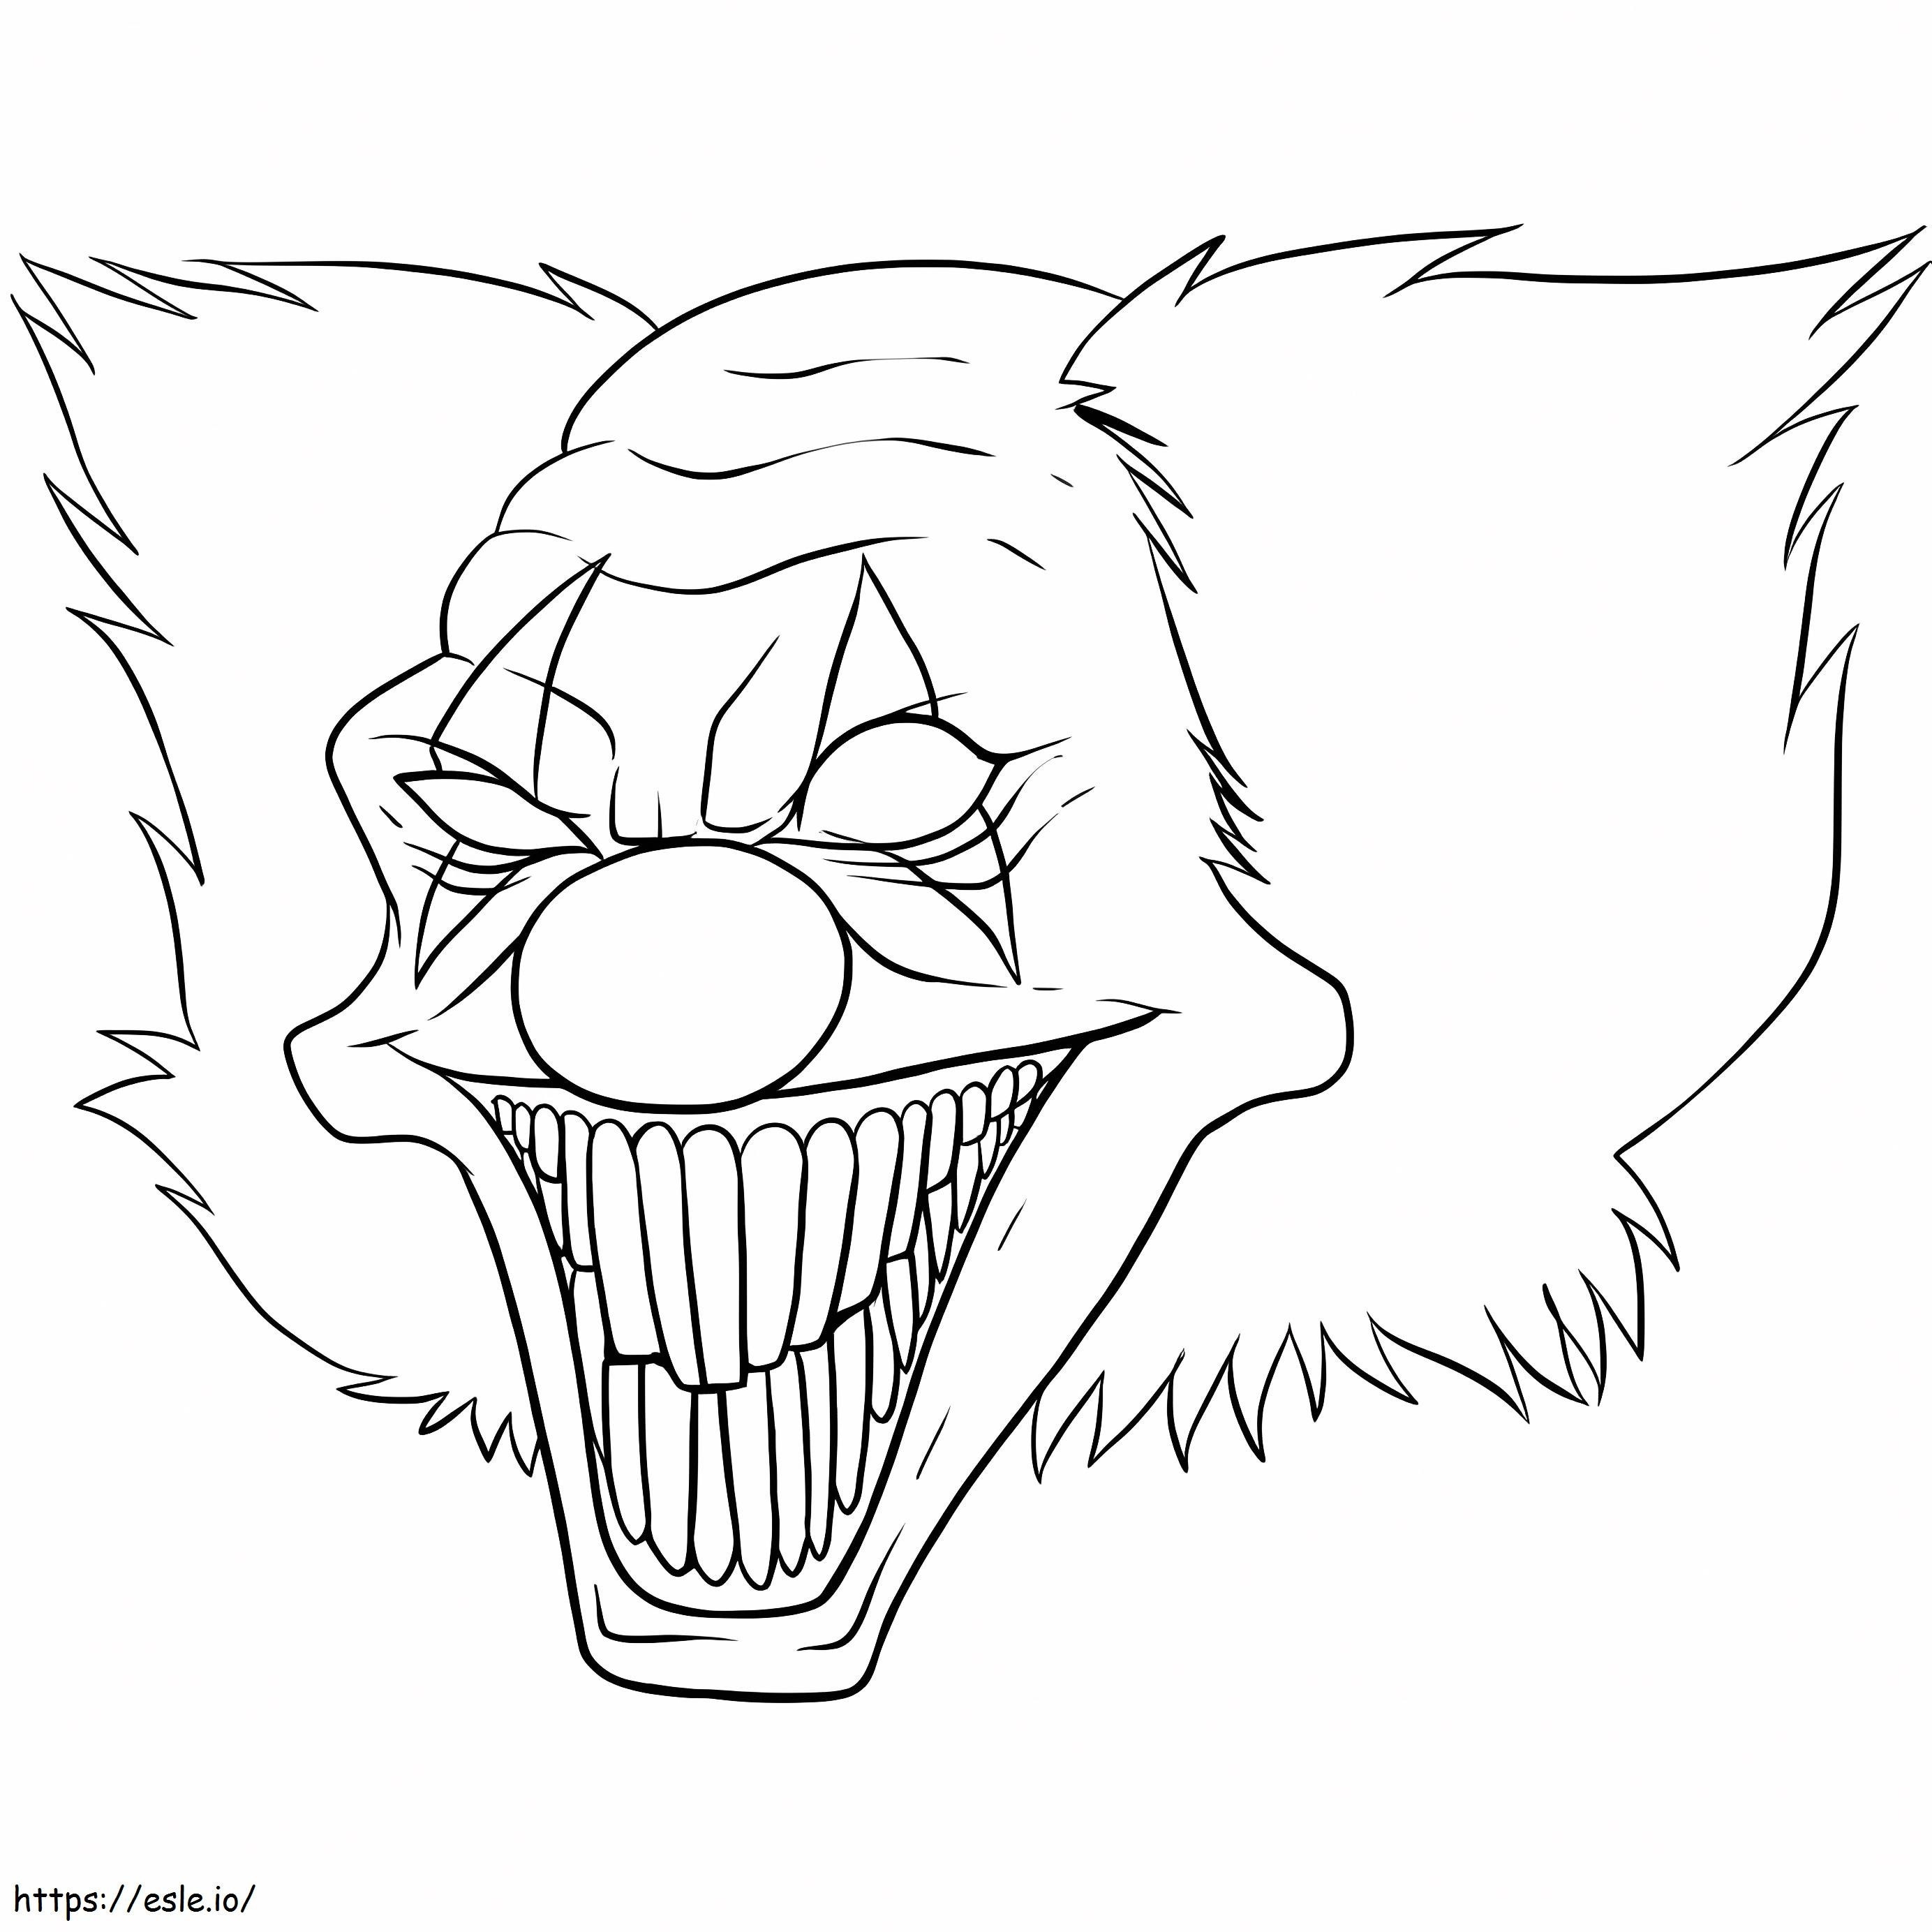 Creepy Clown coloring page